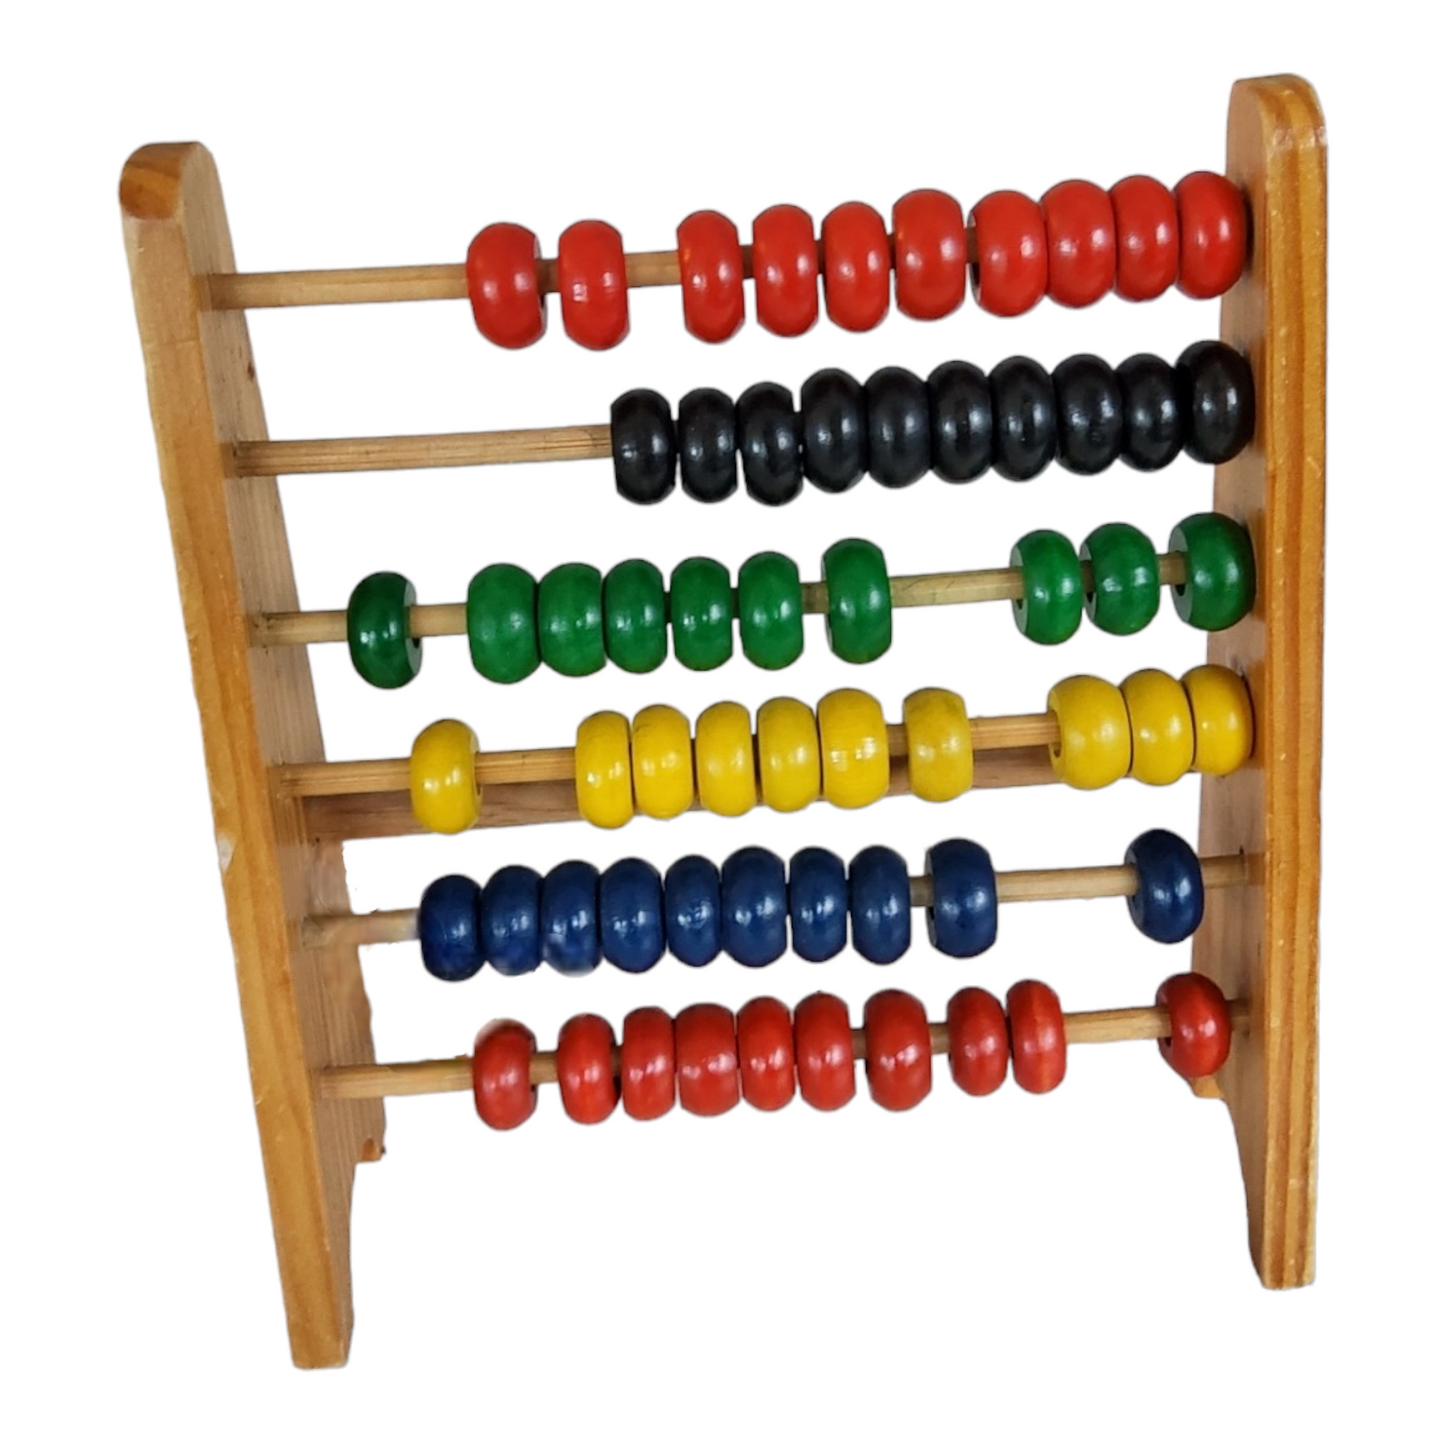 Abacus multicolour